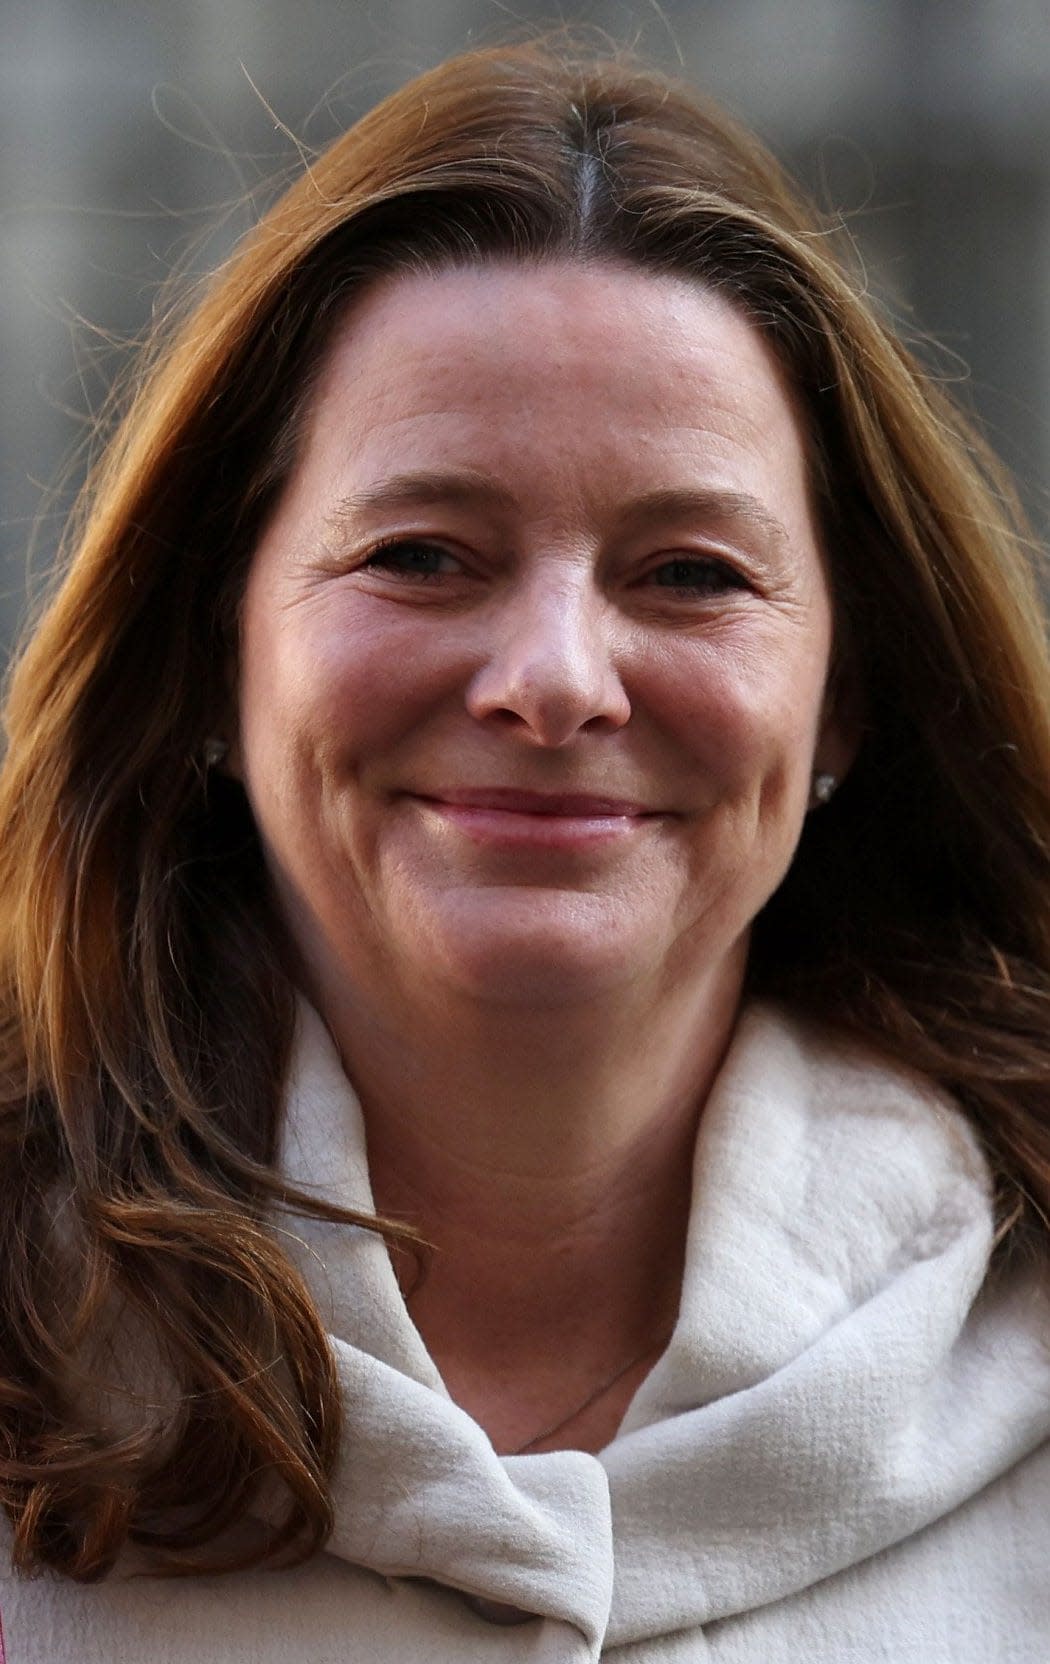 Gillian Keegan, the secretary of state for education